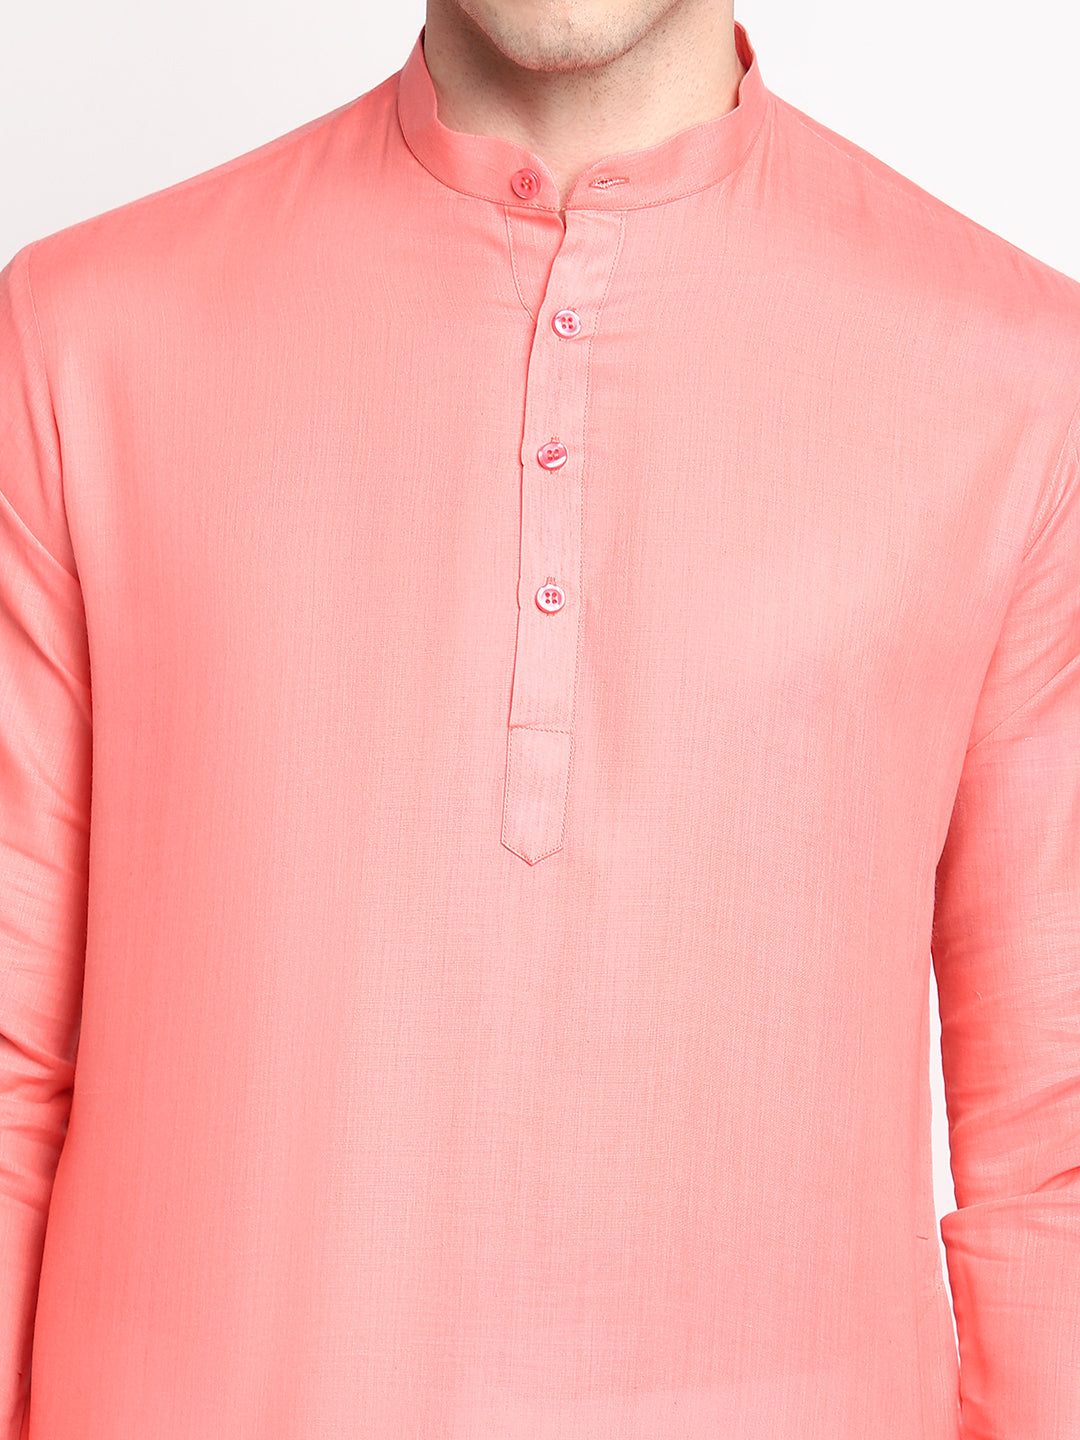 Peach/ Pink Solid Straight Cotton Blend Men's Kurta